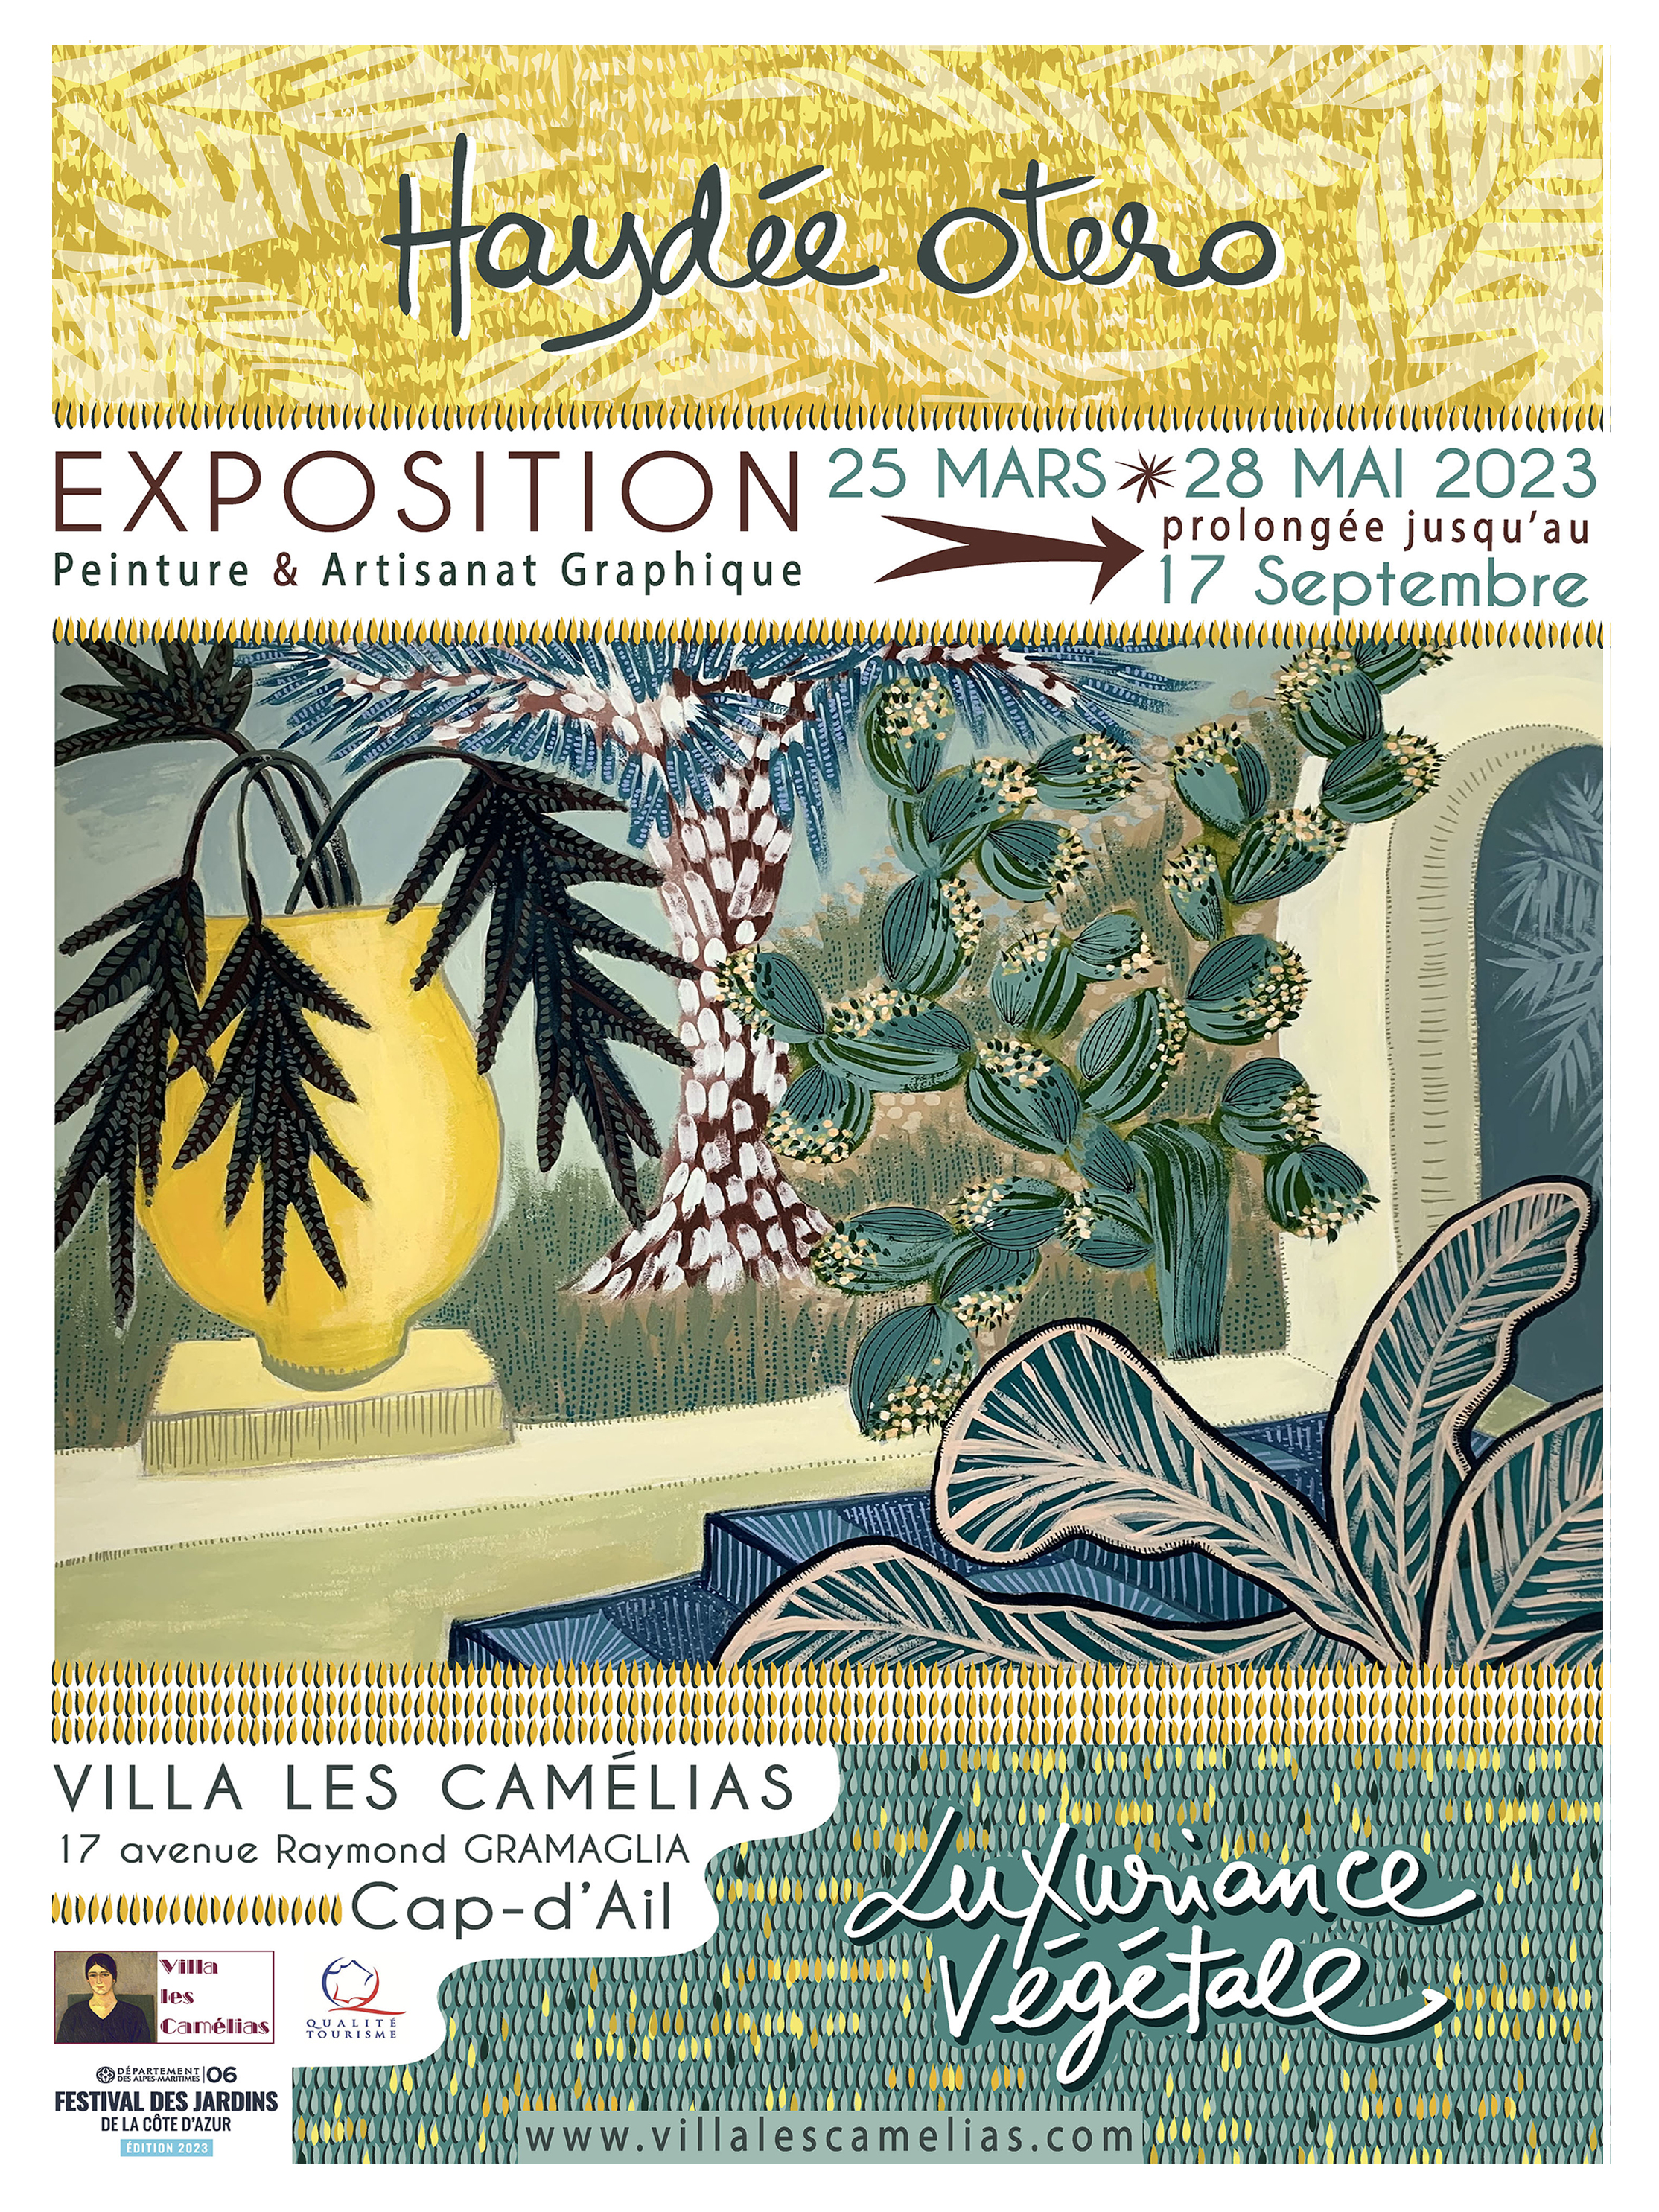 Poster of the exhibition of Anisette Design at the Villa les camélias at Cap d'Ail